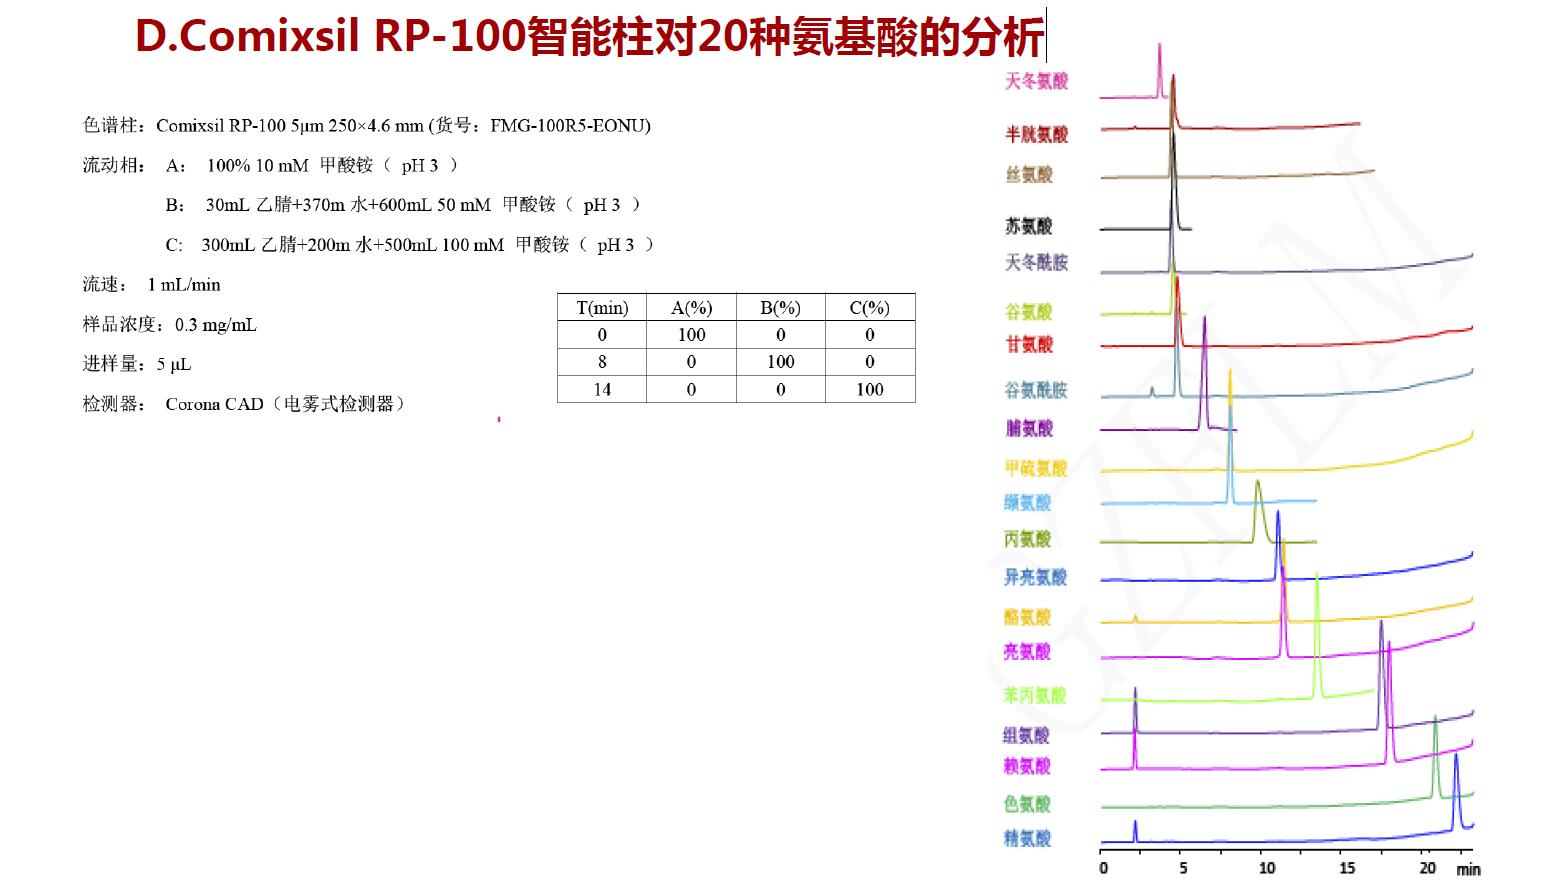 Comixsil RP-100智能柱对20种氨基酸的分析